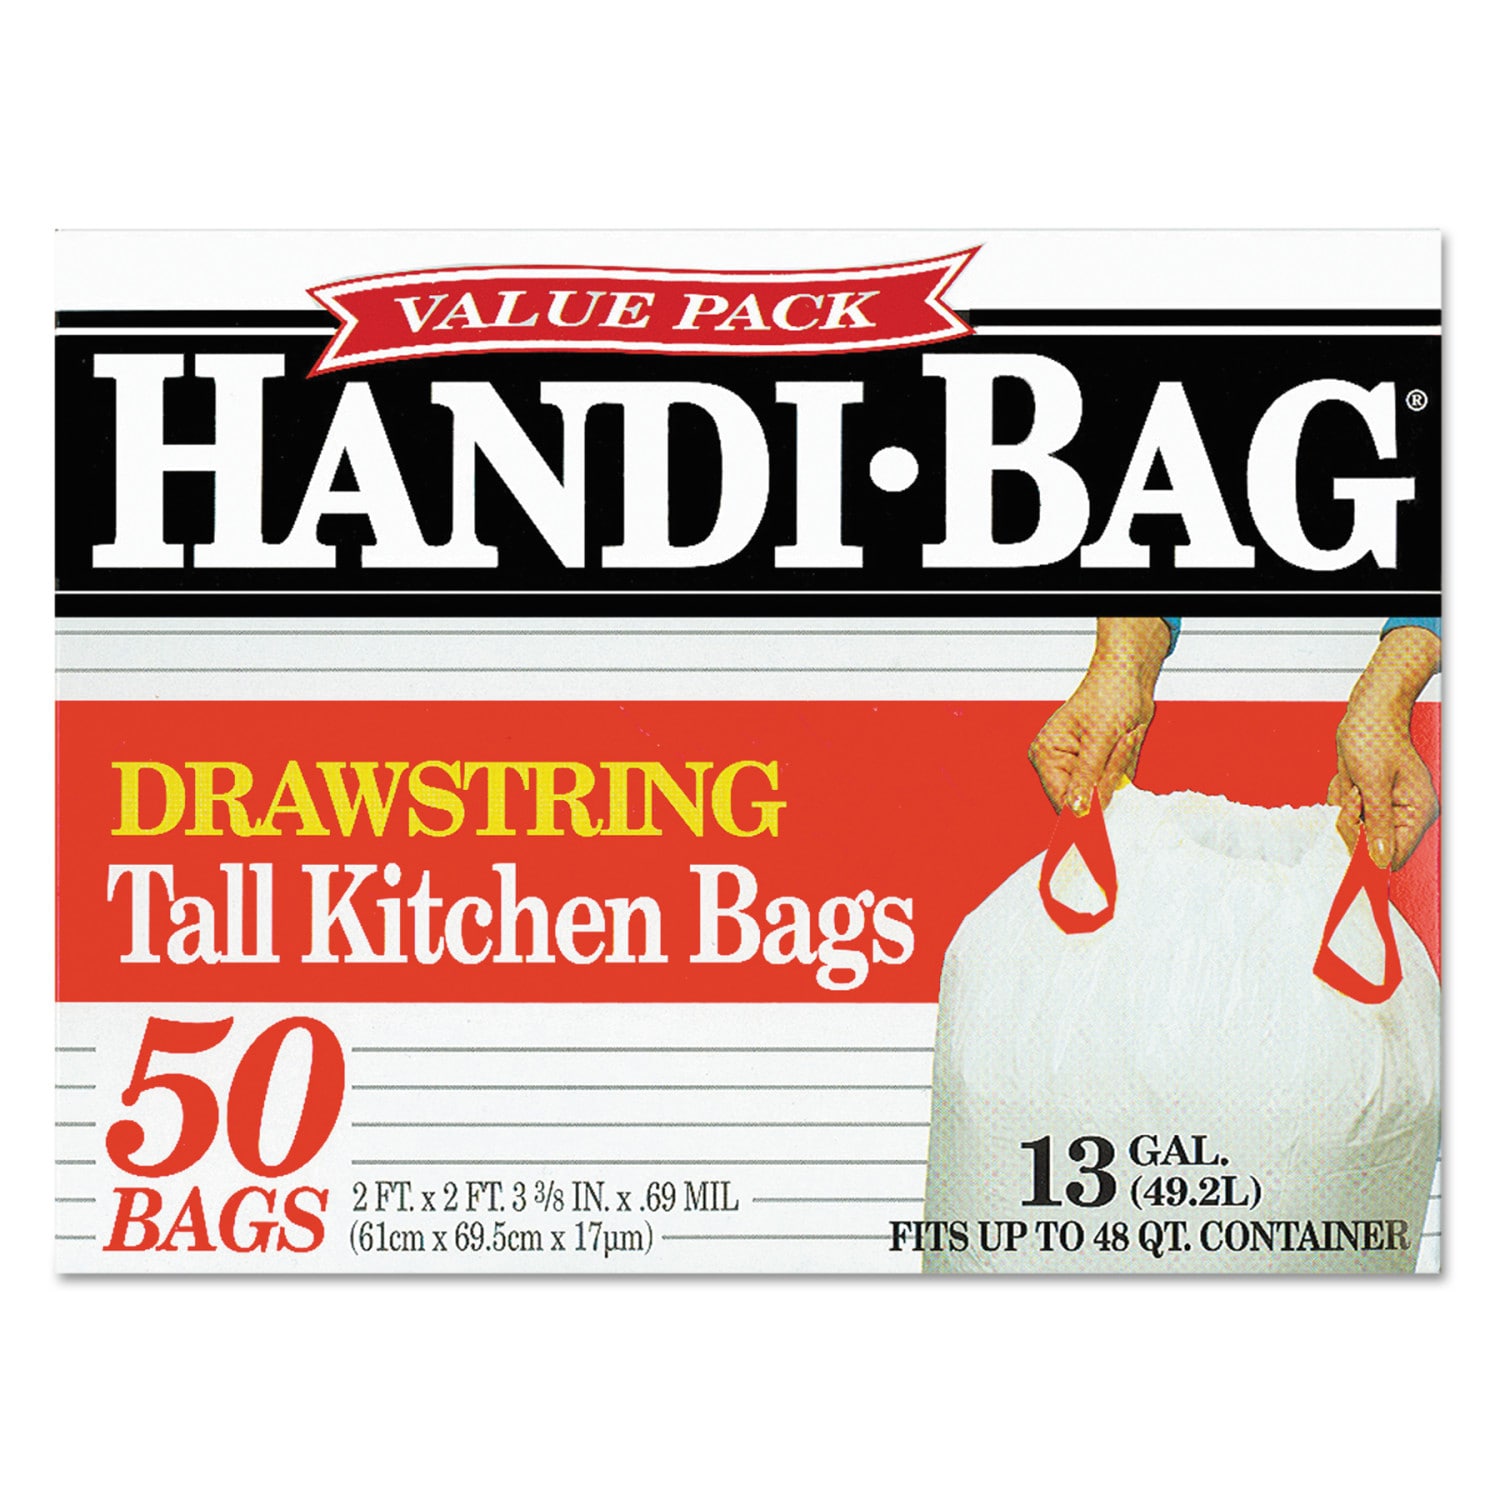 13 Gallon Kirkland Drawstring Trash Bags - 200 count 